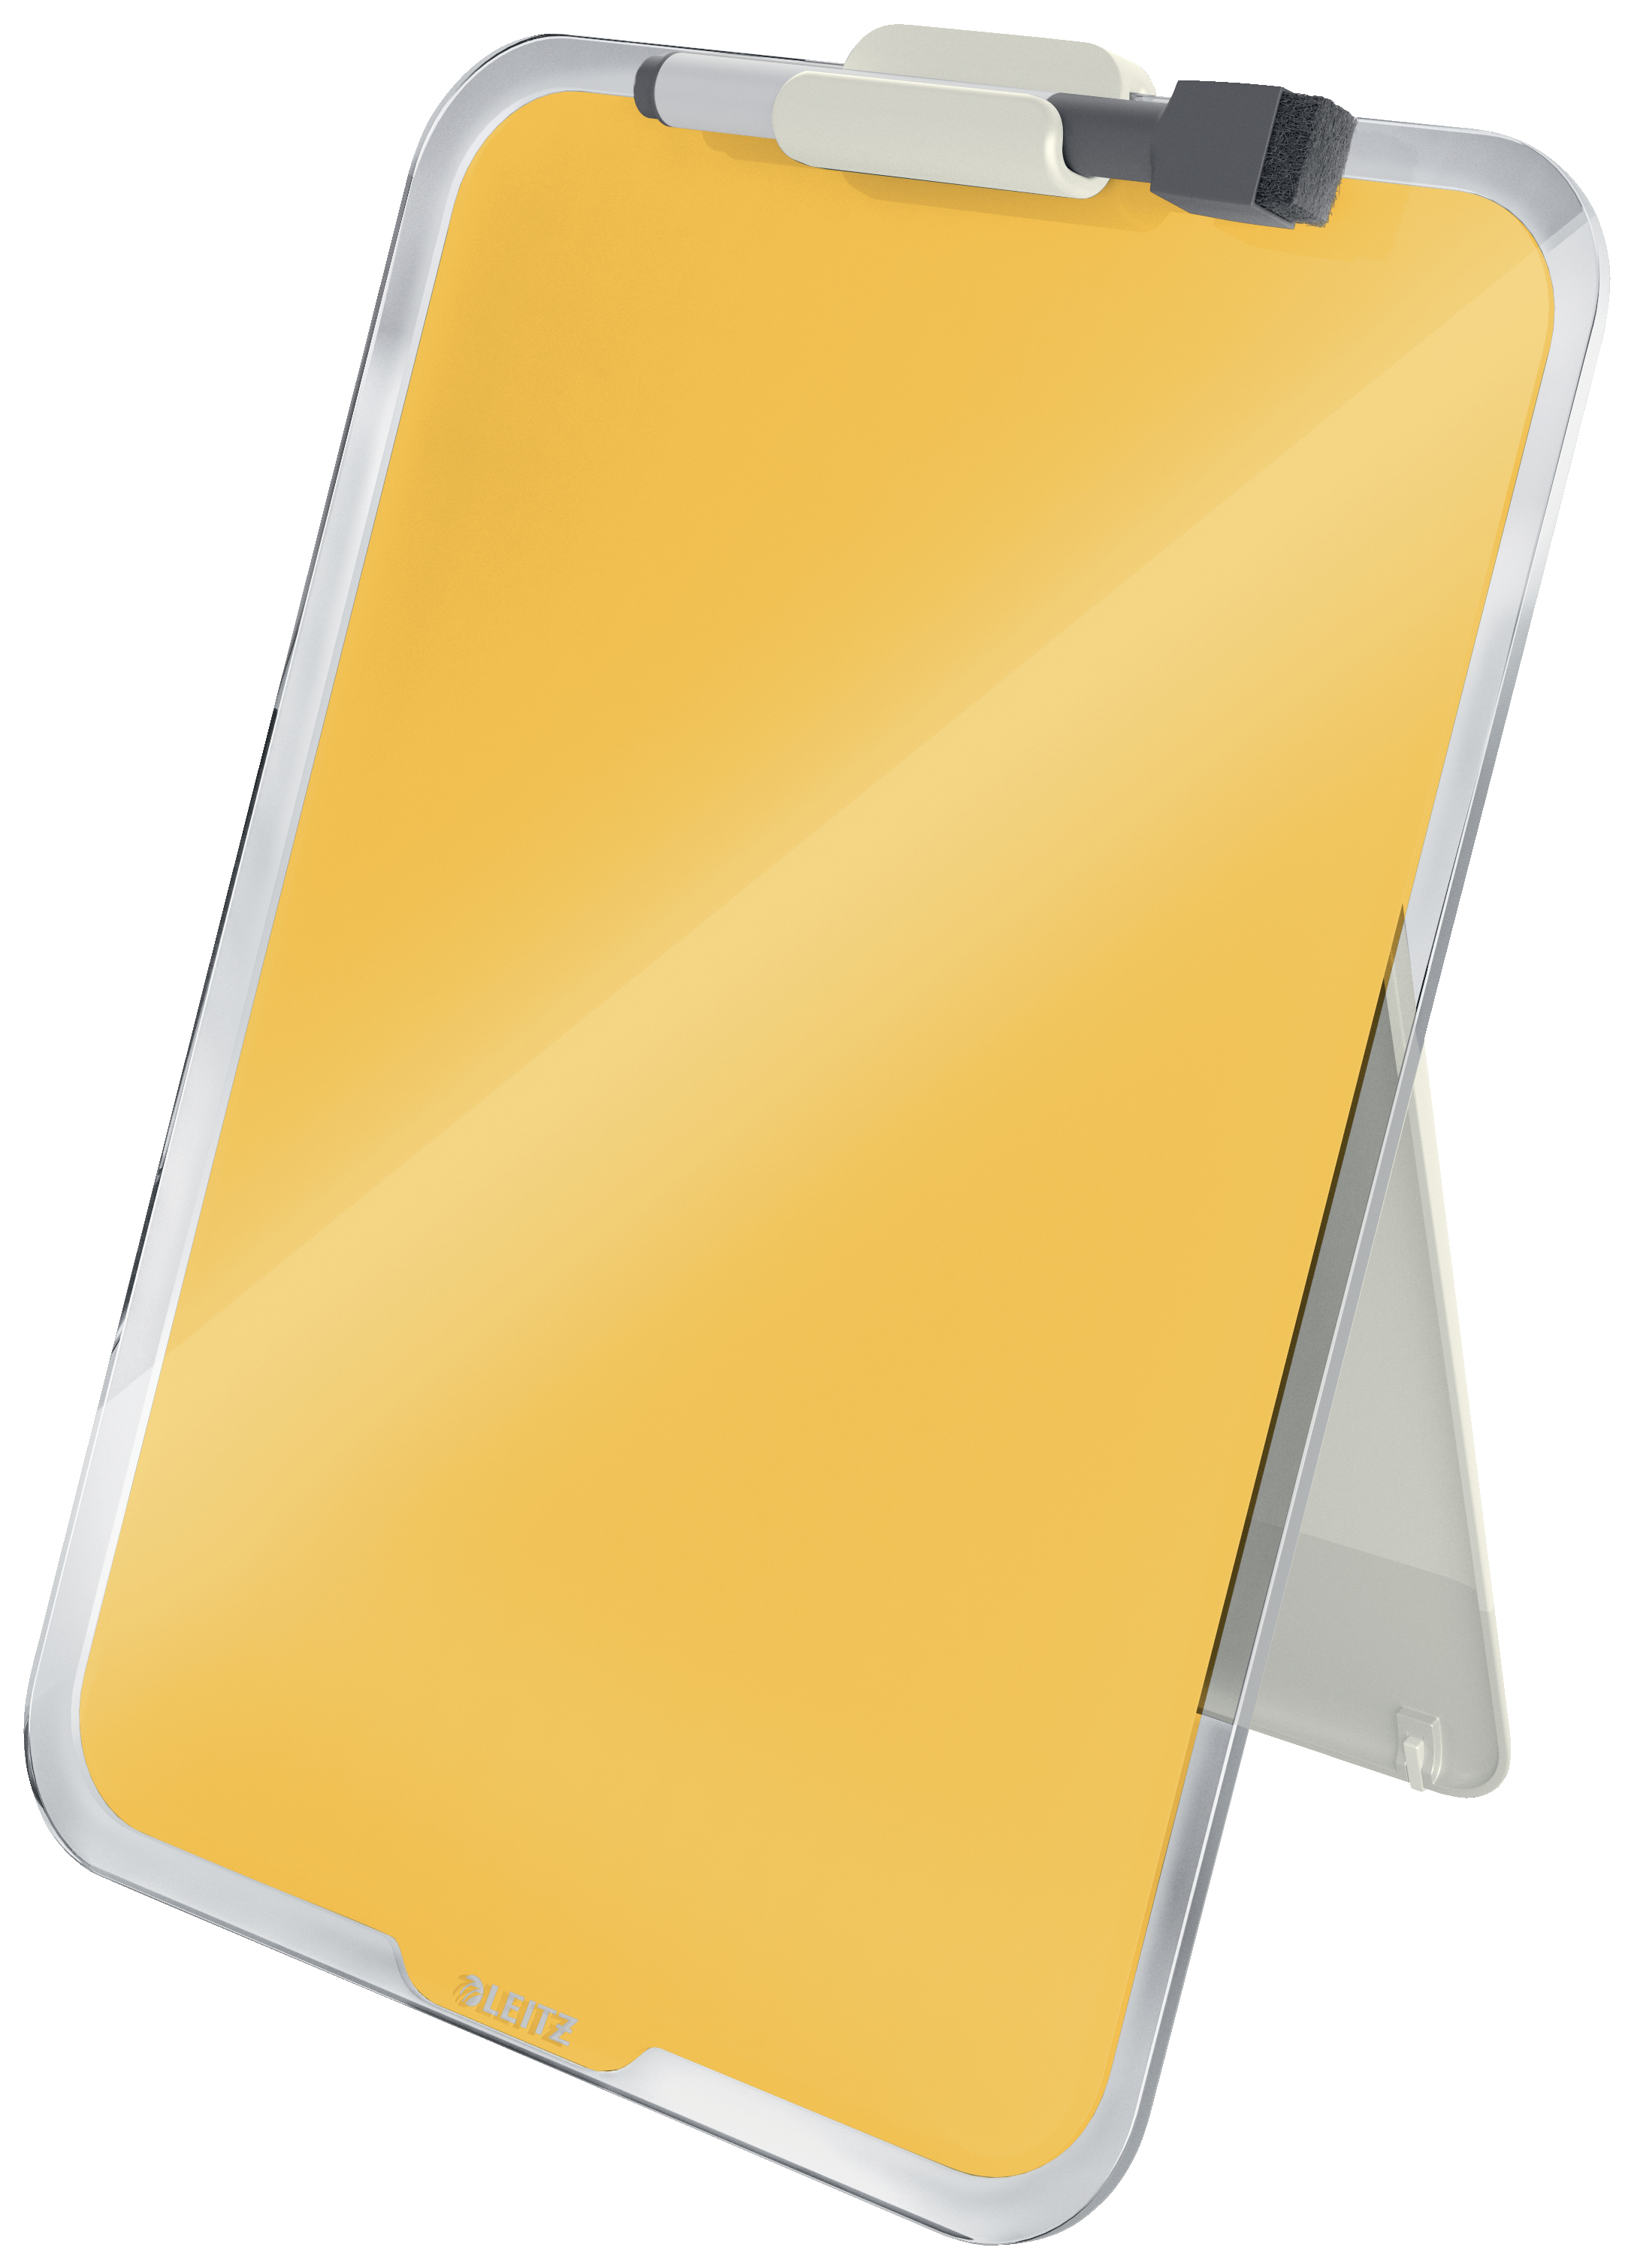 LEITZ Glass Noteboard Cosy 3947-00-19 jaune 33x25x7.5cm